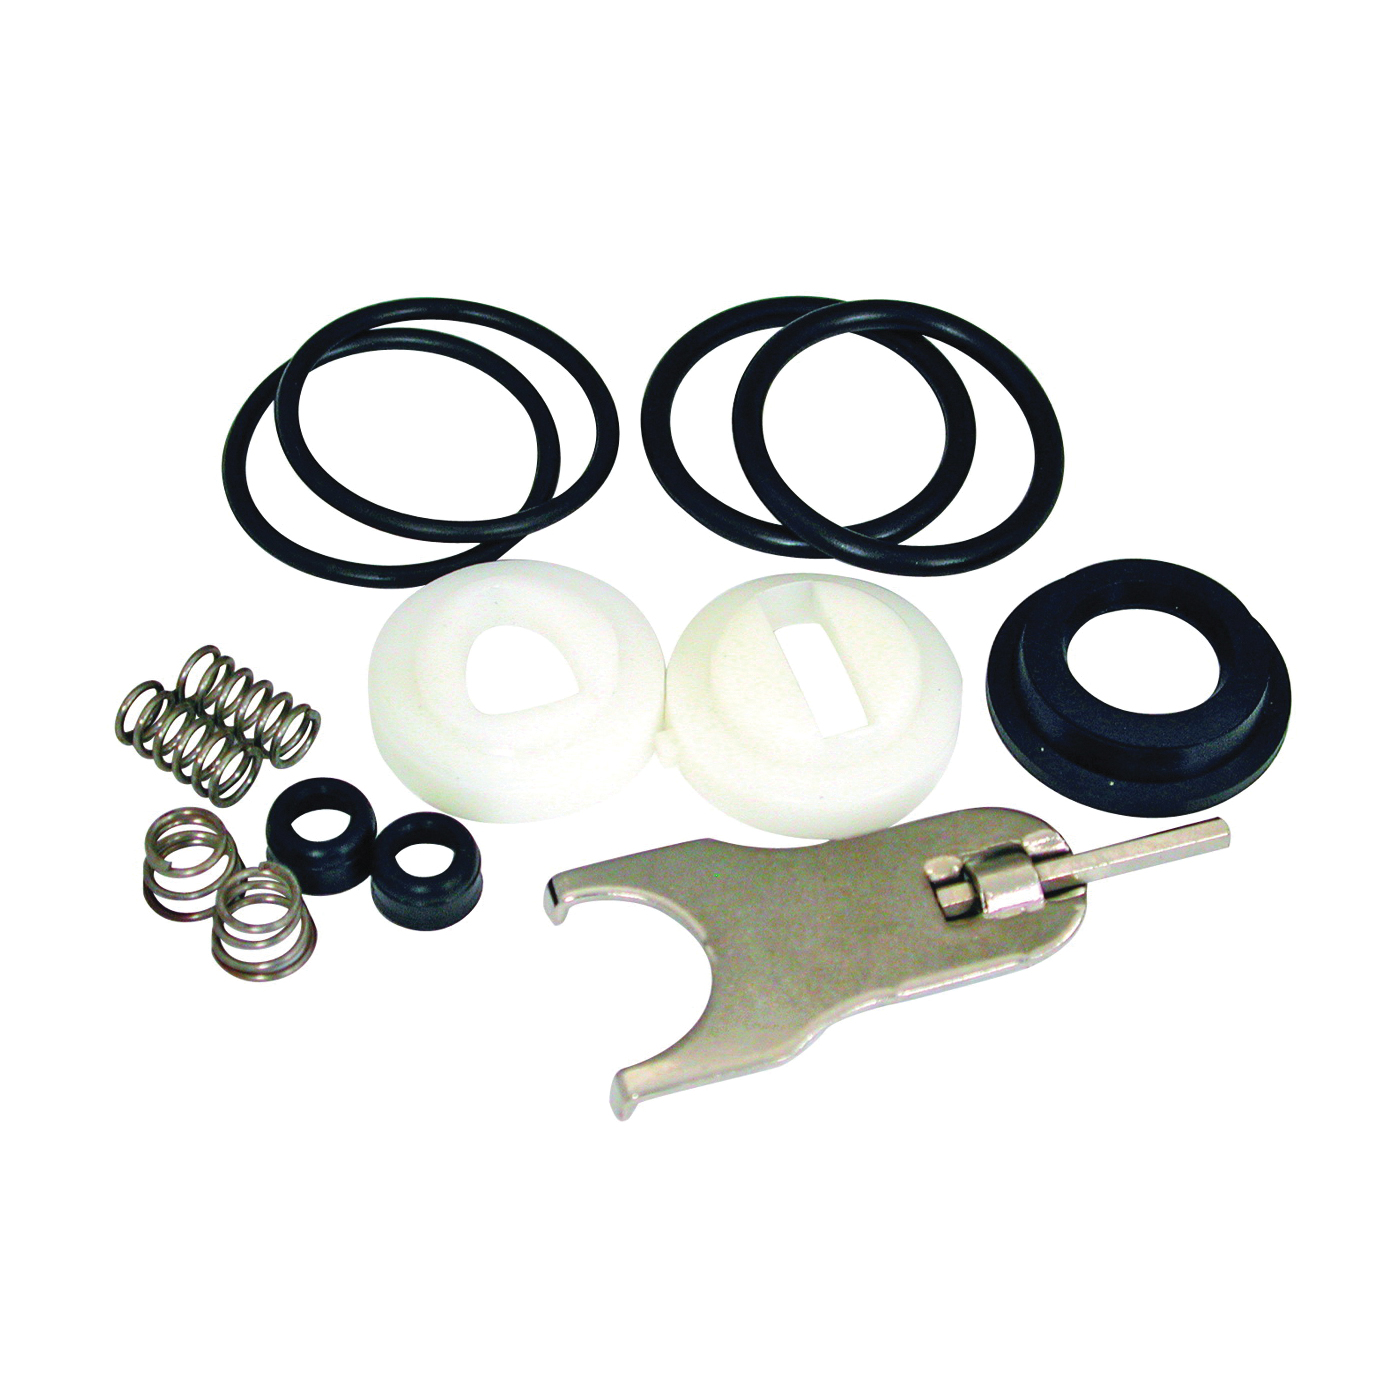 Danco 88103 Cartridge Repair Kit, Plastic/Rubber/Stainless Steel, Black